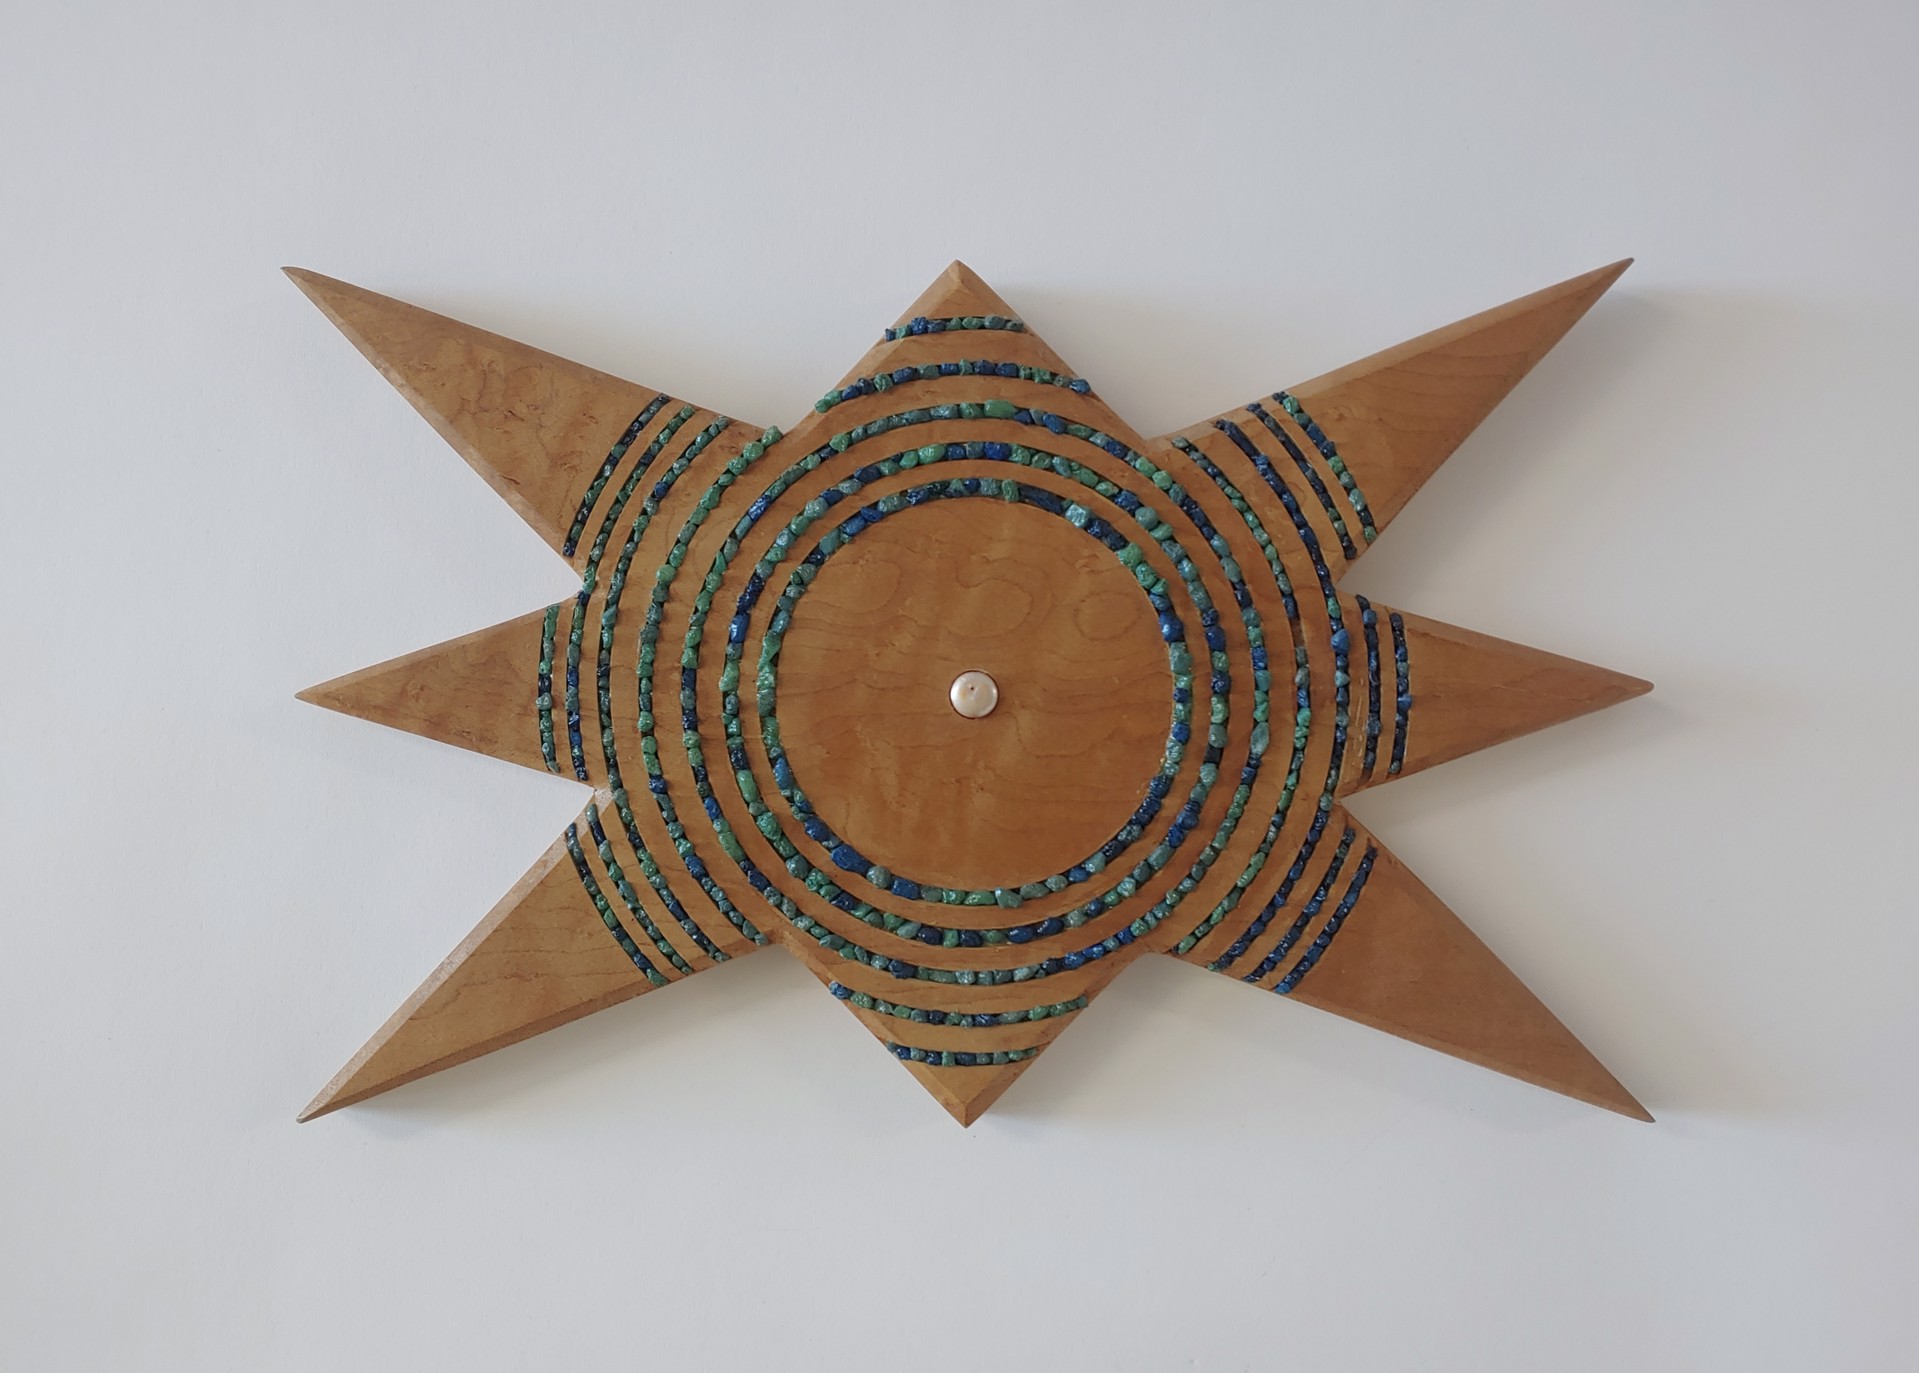 8 Pointed Star Mosaic - Wood Sculpture by David Amdur